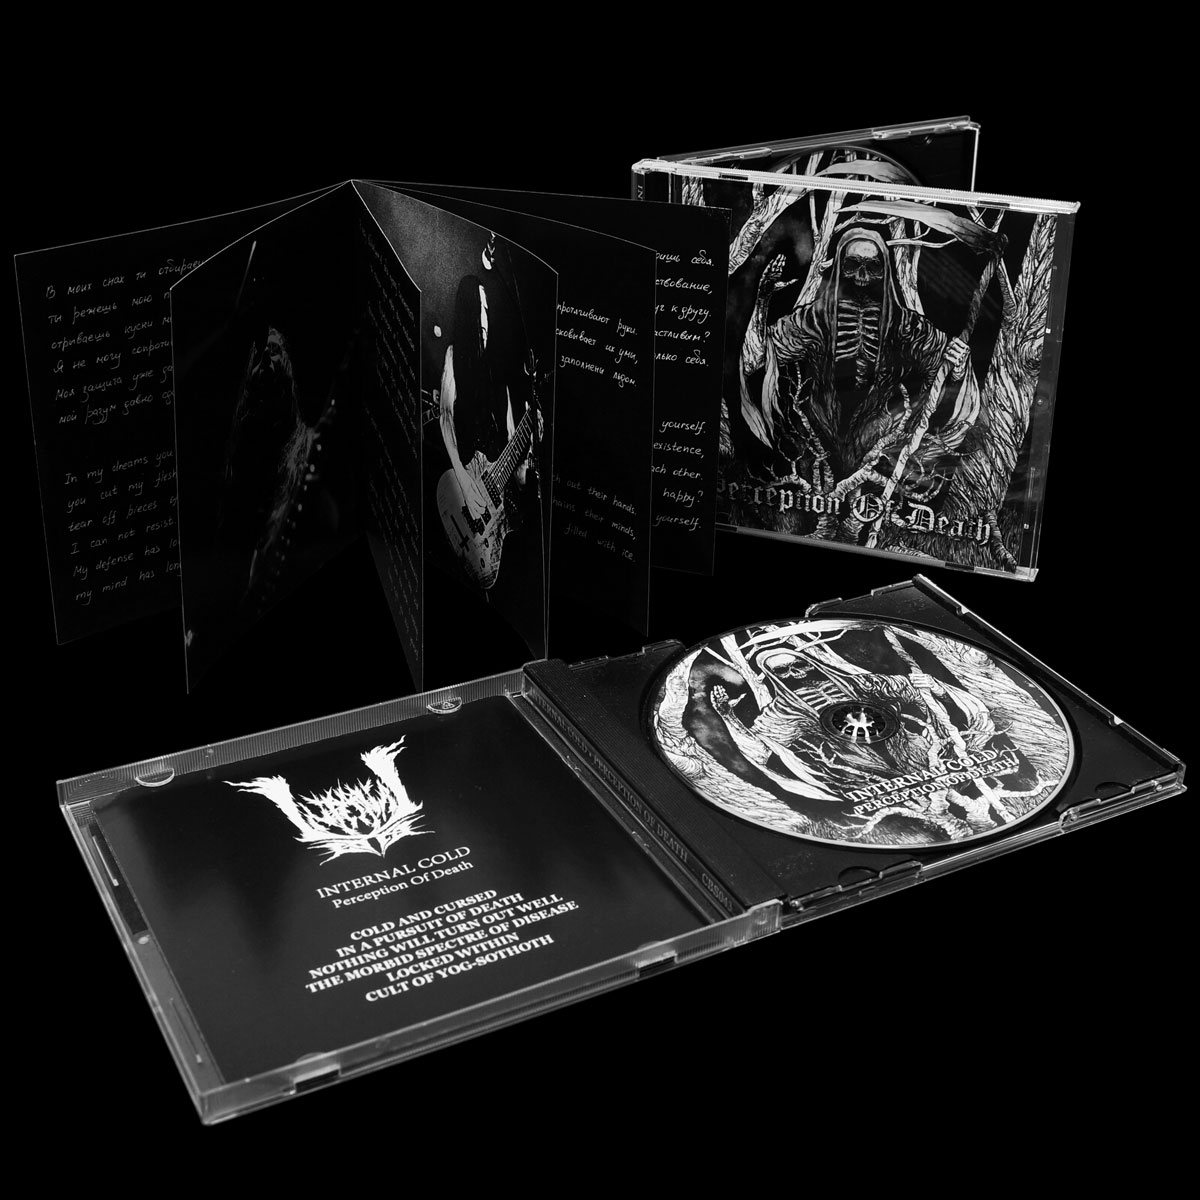 'Perception of death' CD